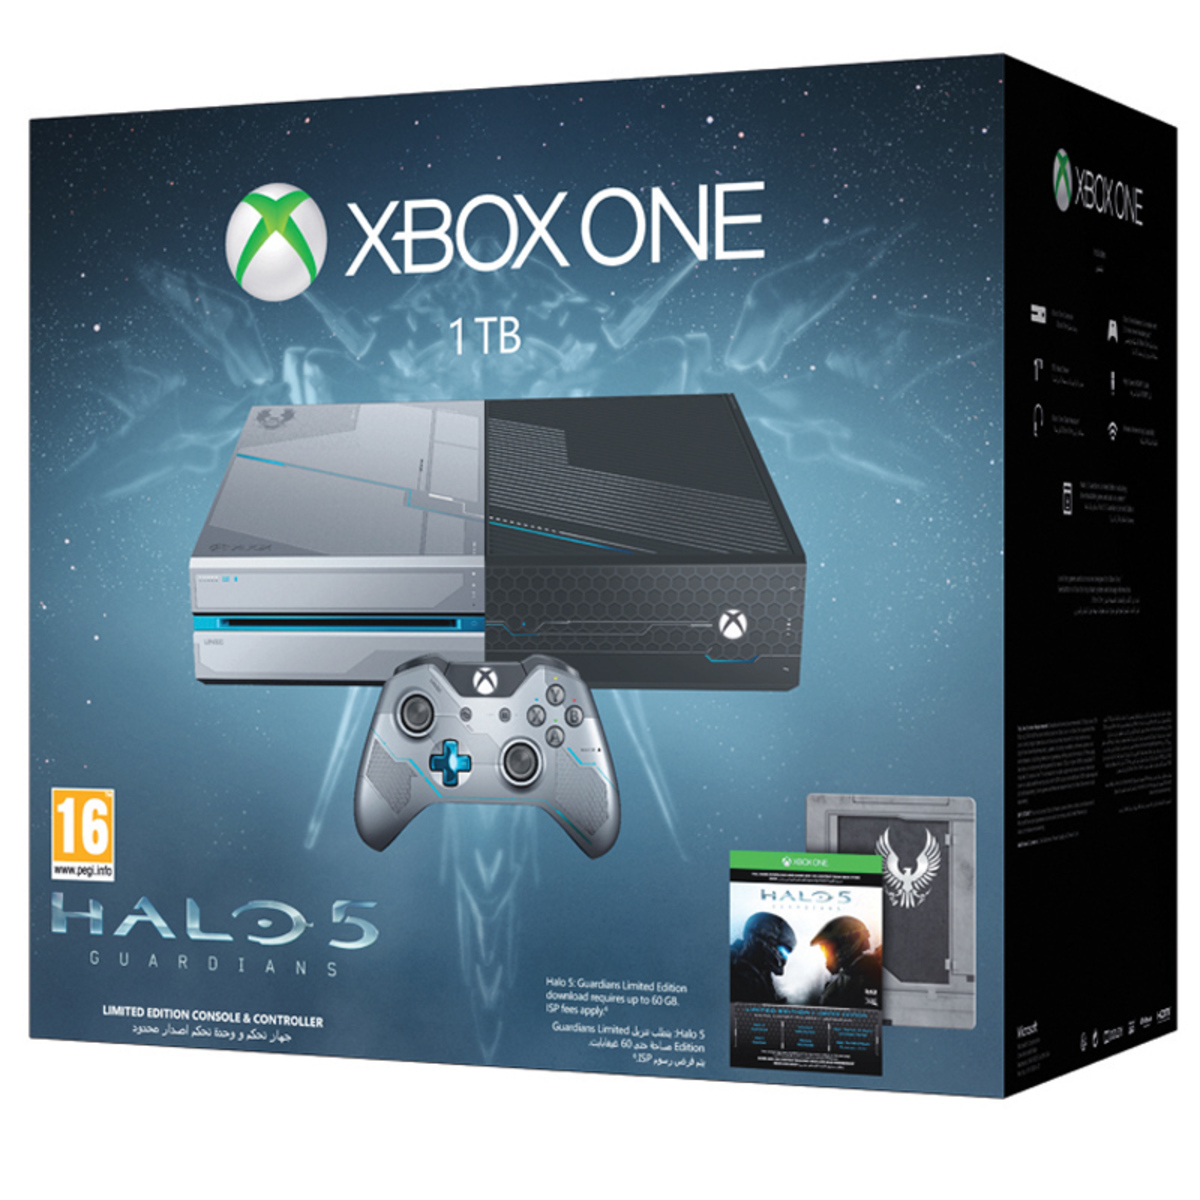 Xbox One 1TB Limited Edition Halo 5: Guardians Bundle